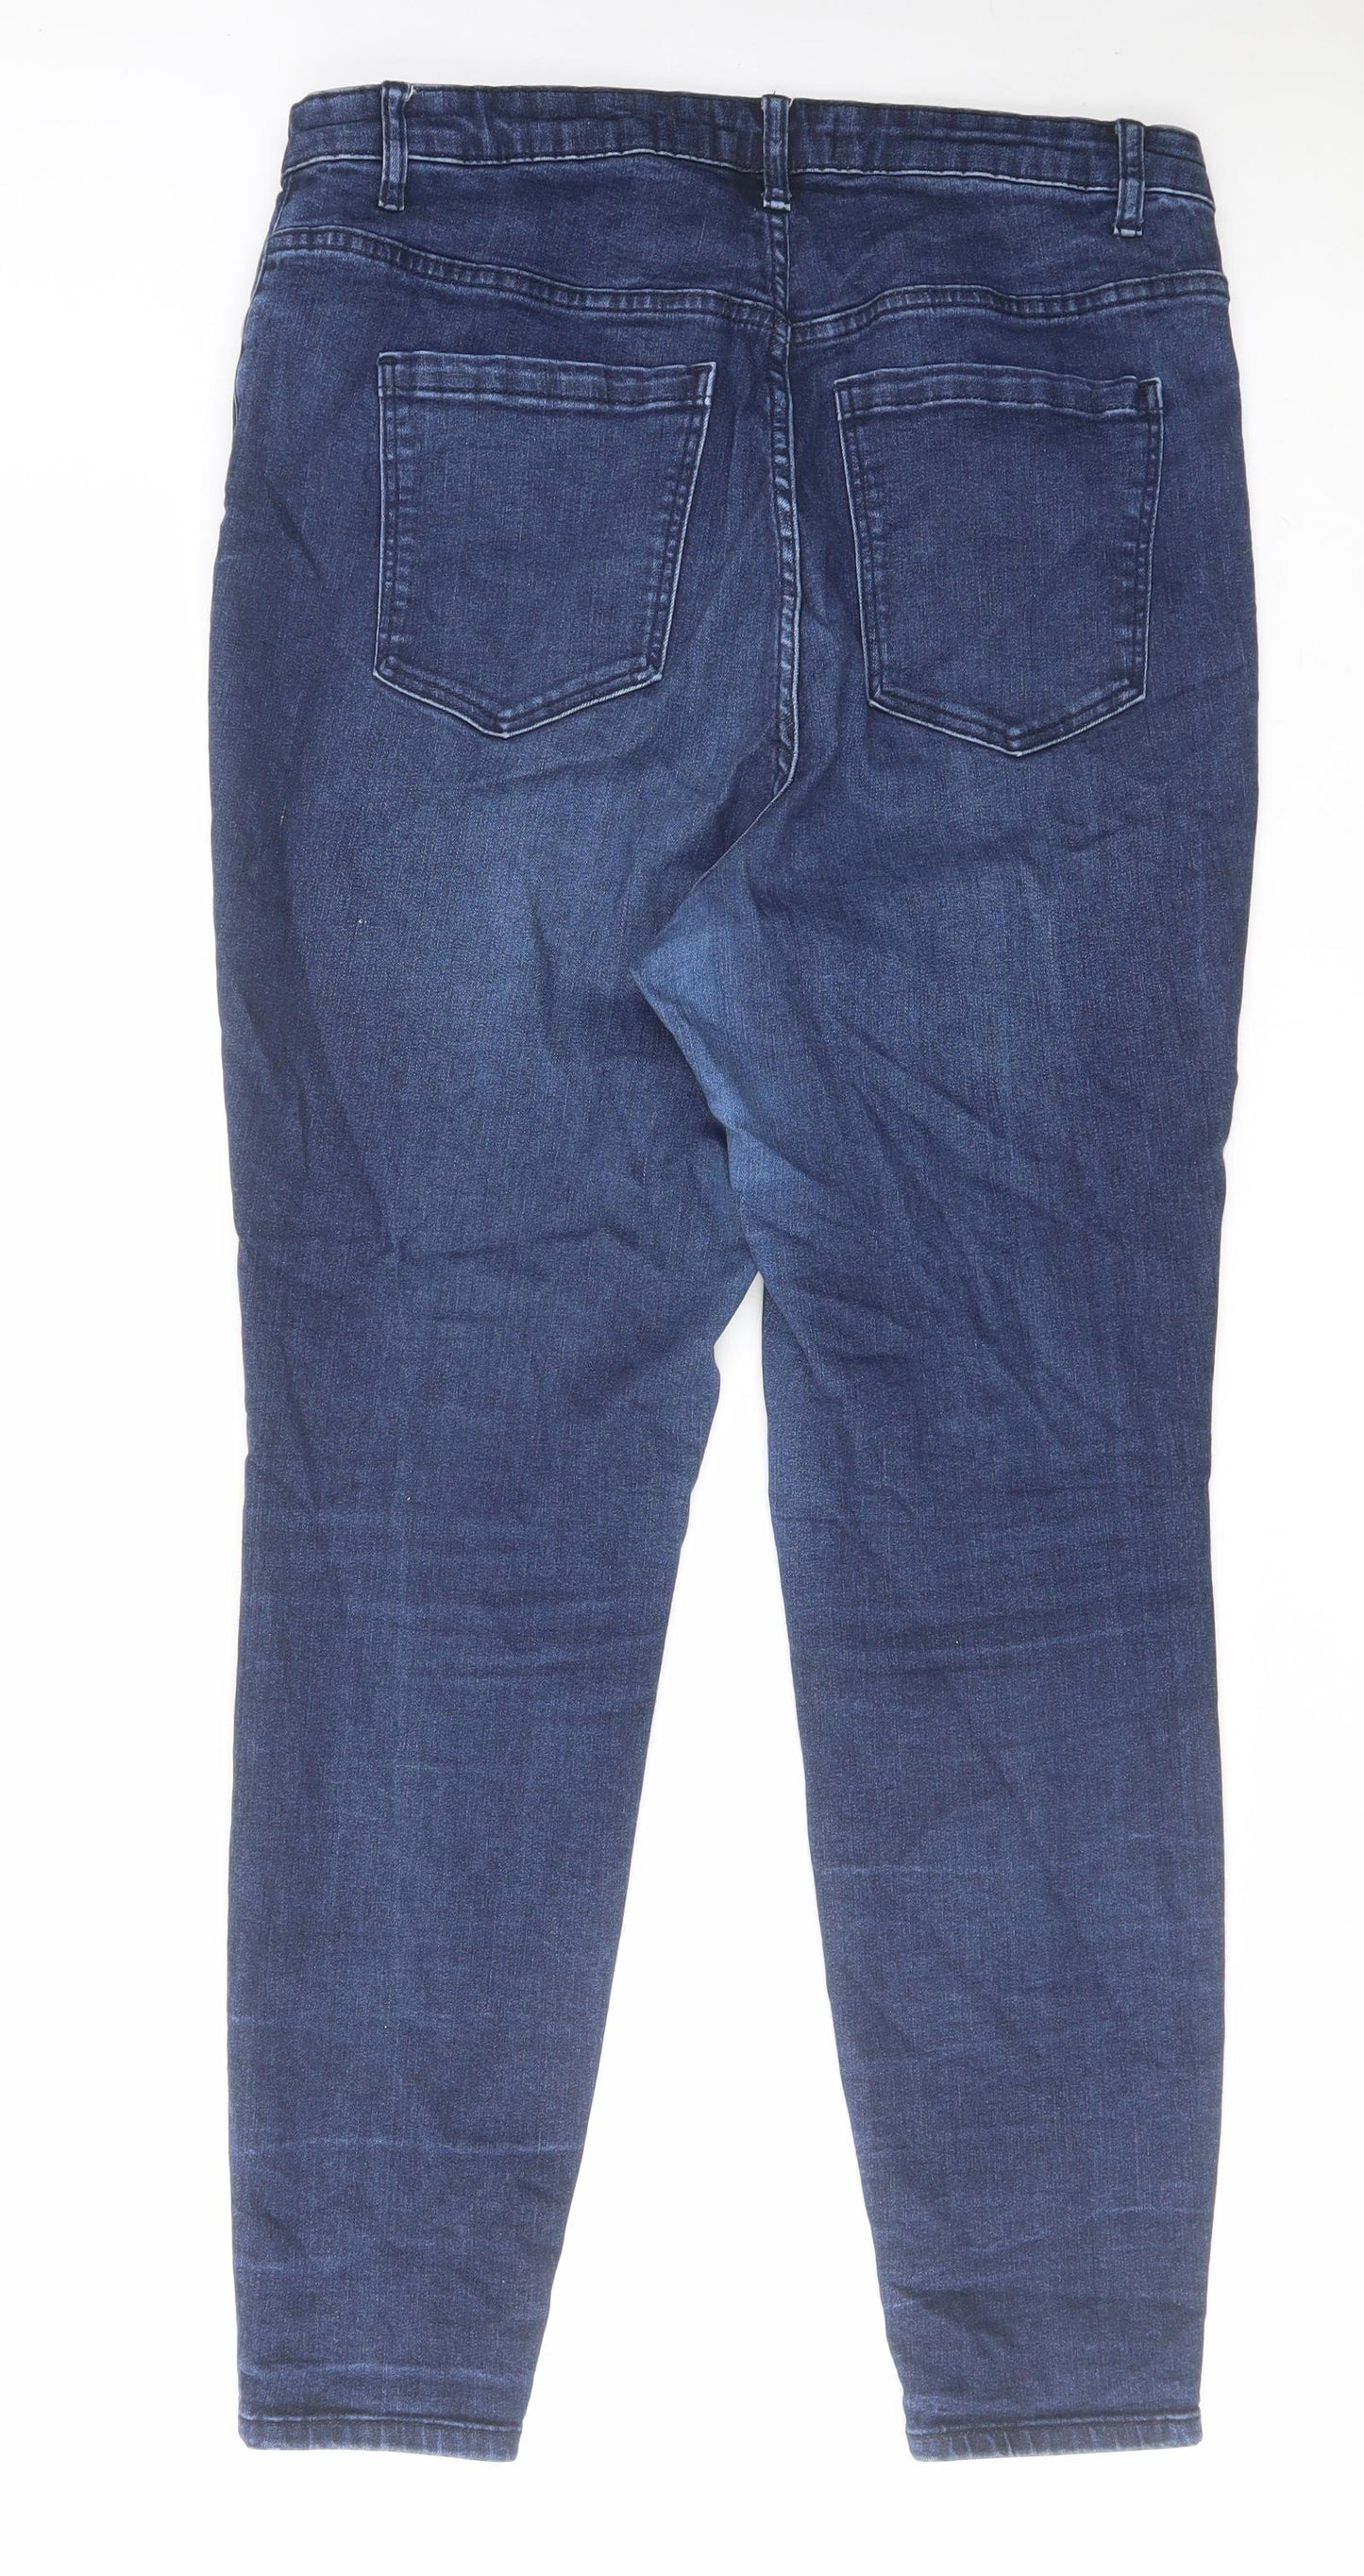 Eloquii Womens Blue Cotton Skinny Jeans Size 16 L29 in Regular Zip